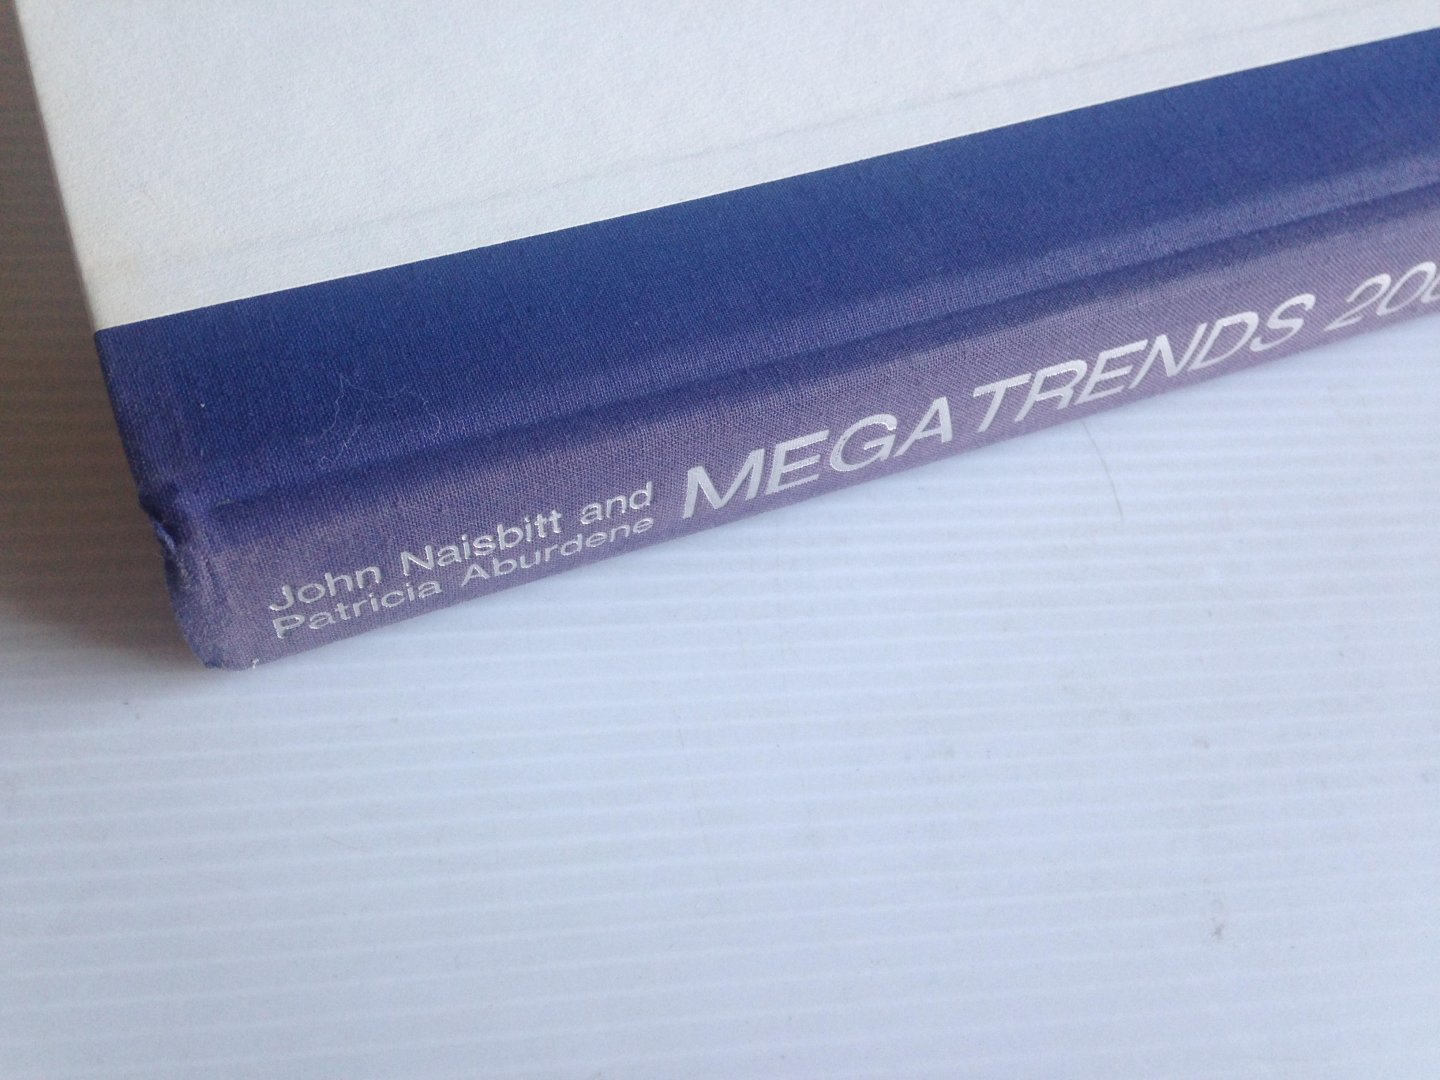 Naisbitt, John & Patricia Aburdenen - Megatrends 2000, Ten New Directions for the 1990’s